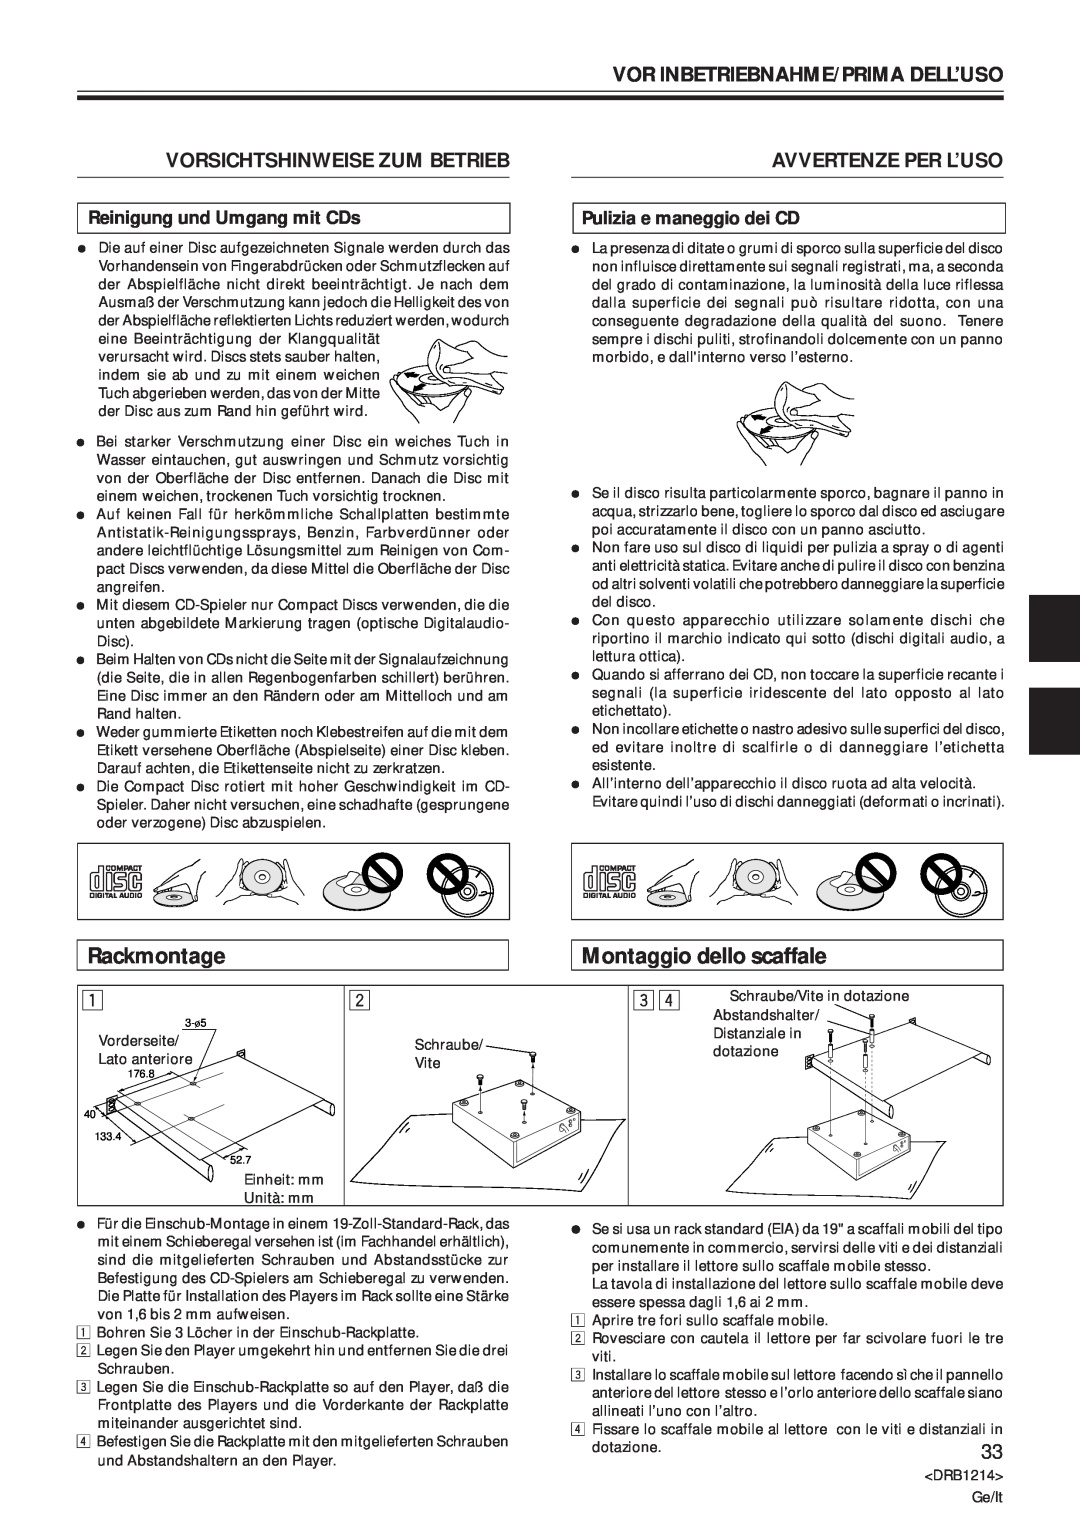 Pioneer CDJ-500S Rackmontage, Montaggio dello scaffale, Reinigung und Umgang mit CDs, Pulizia e maneggio dei CD 